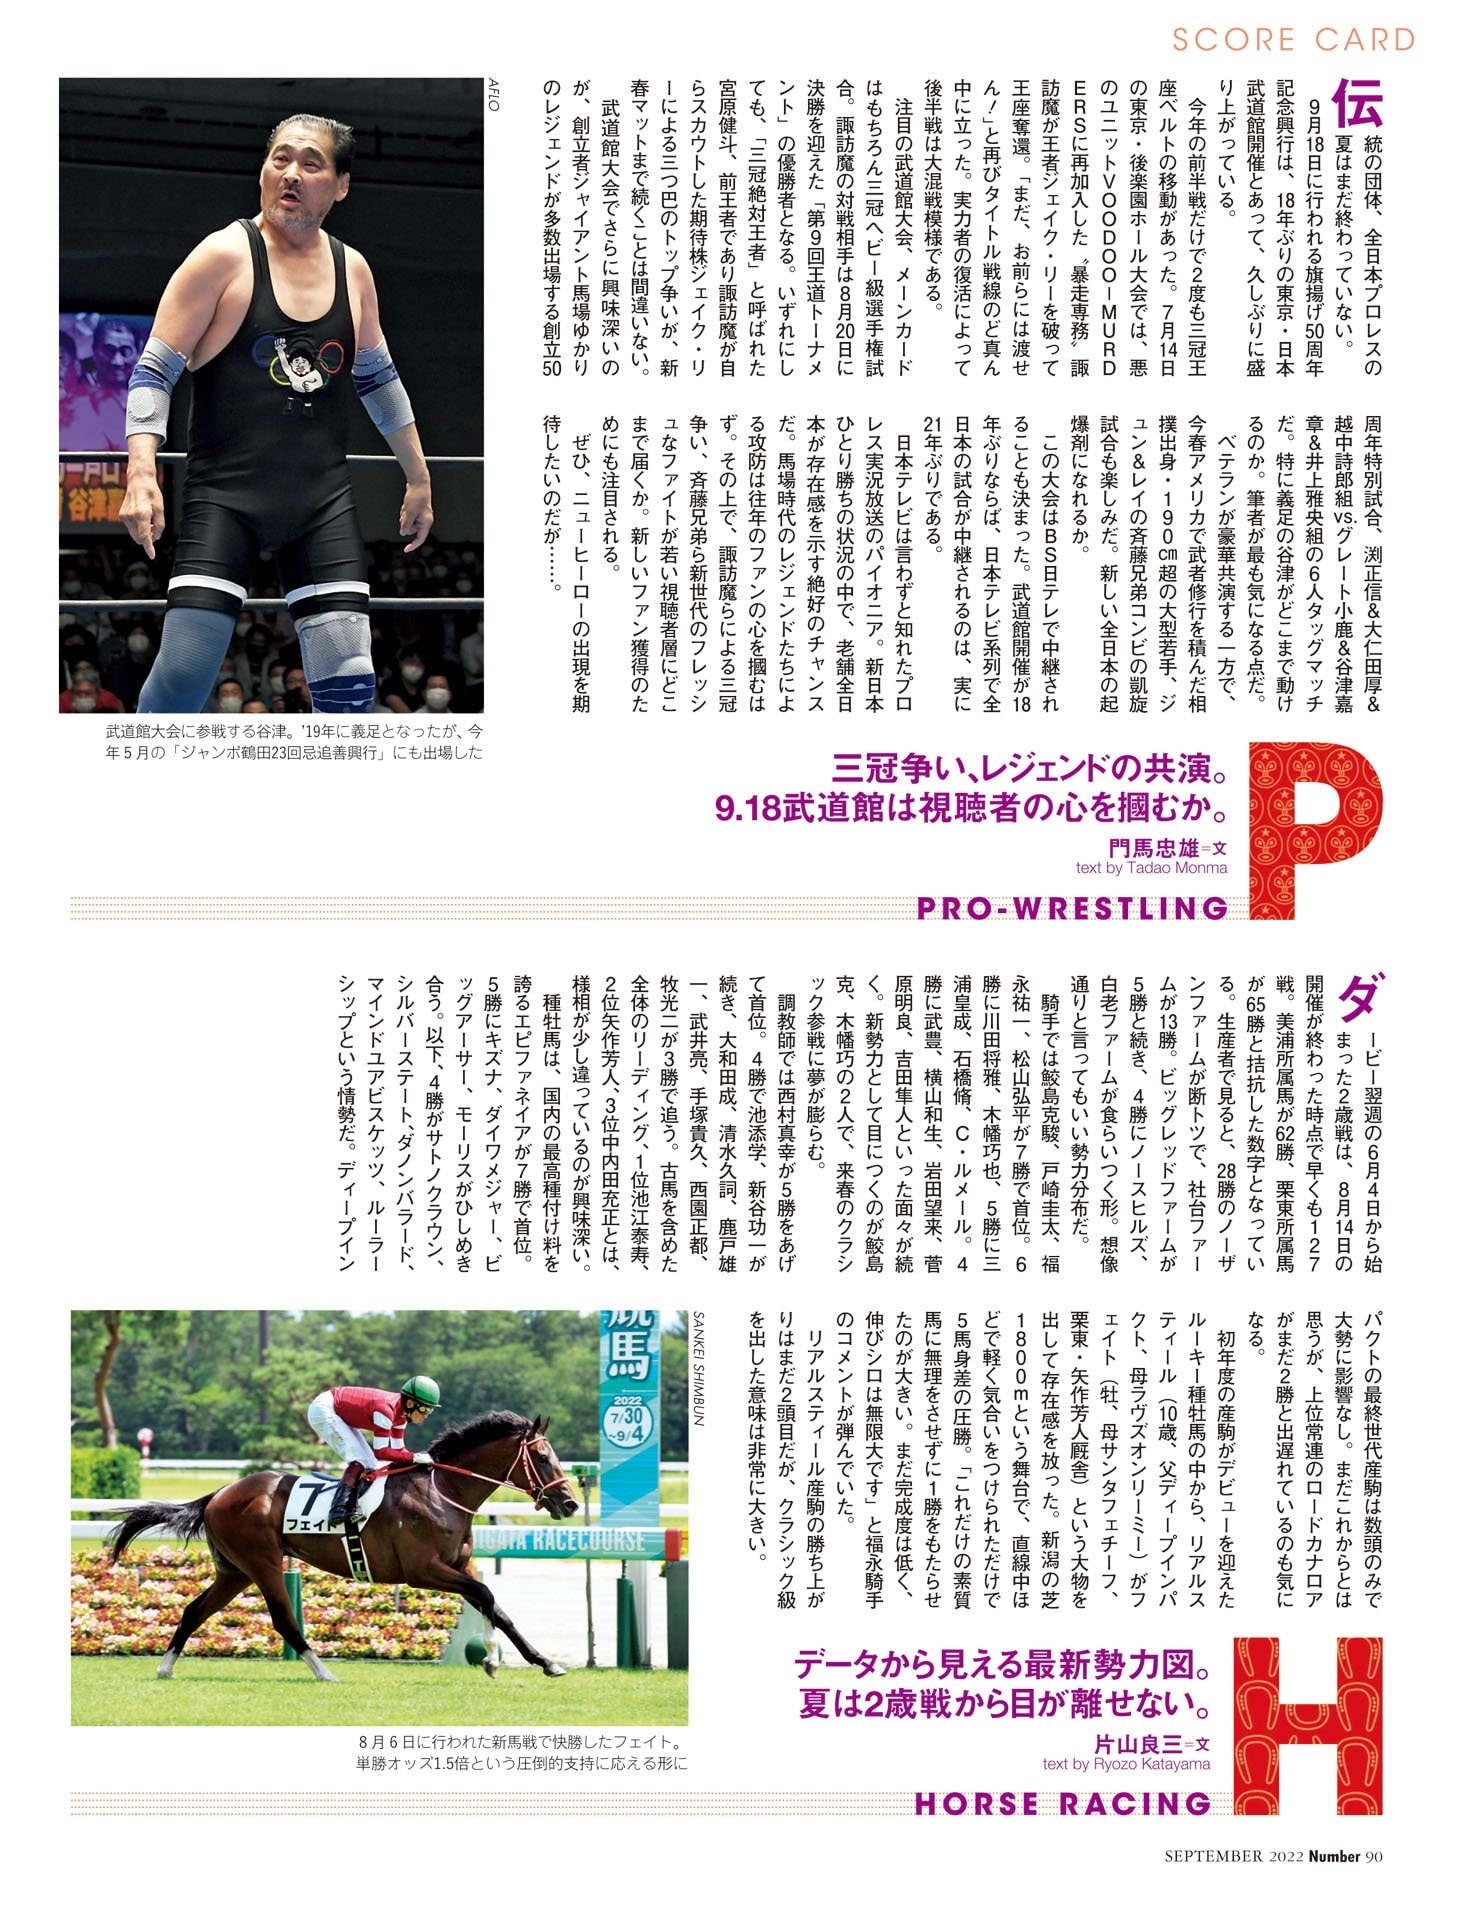 【SCORE CARD】PRO-WRESTLING／HORSE RACING